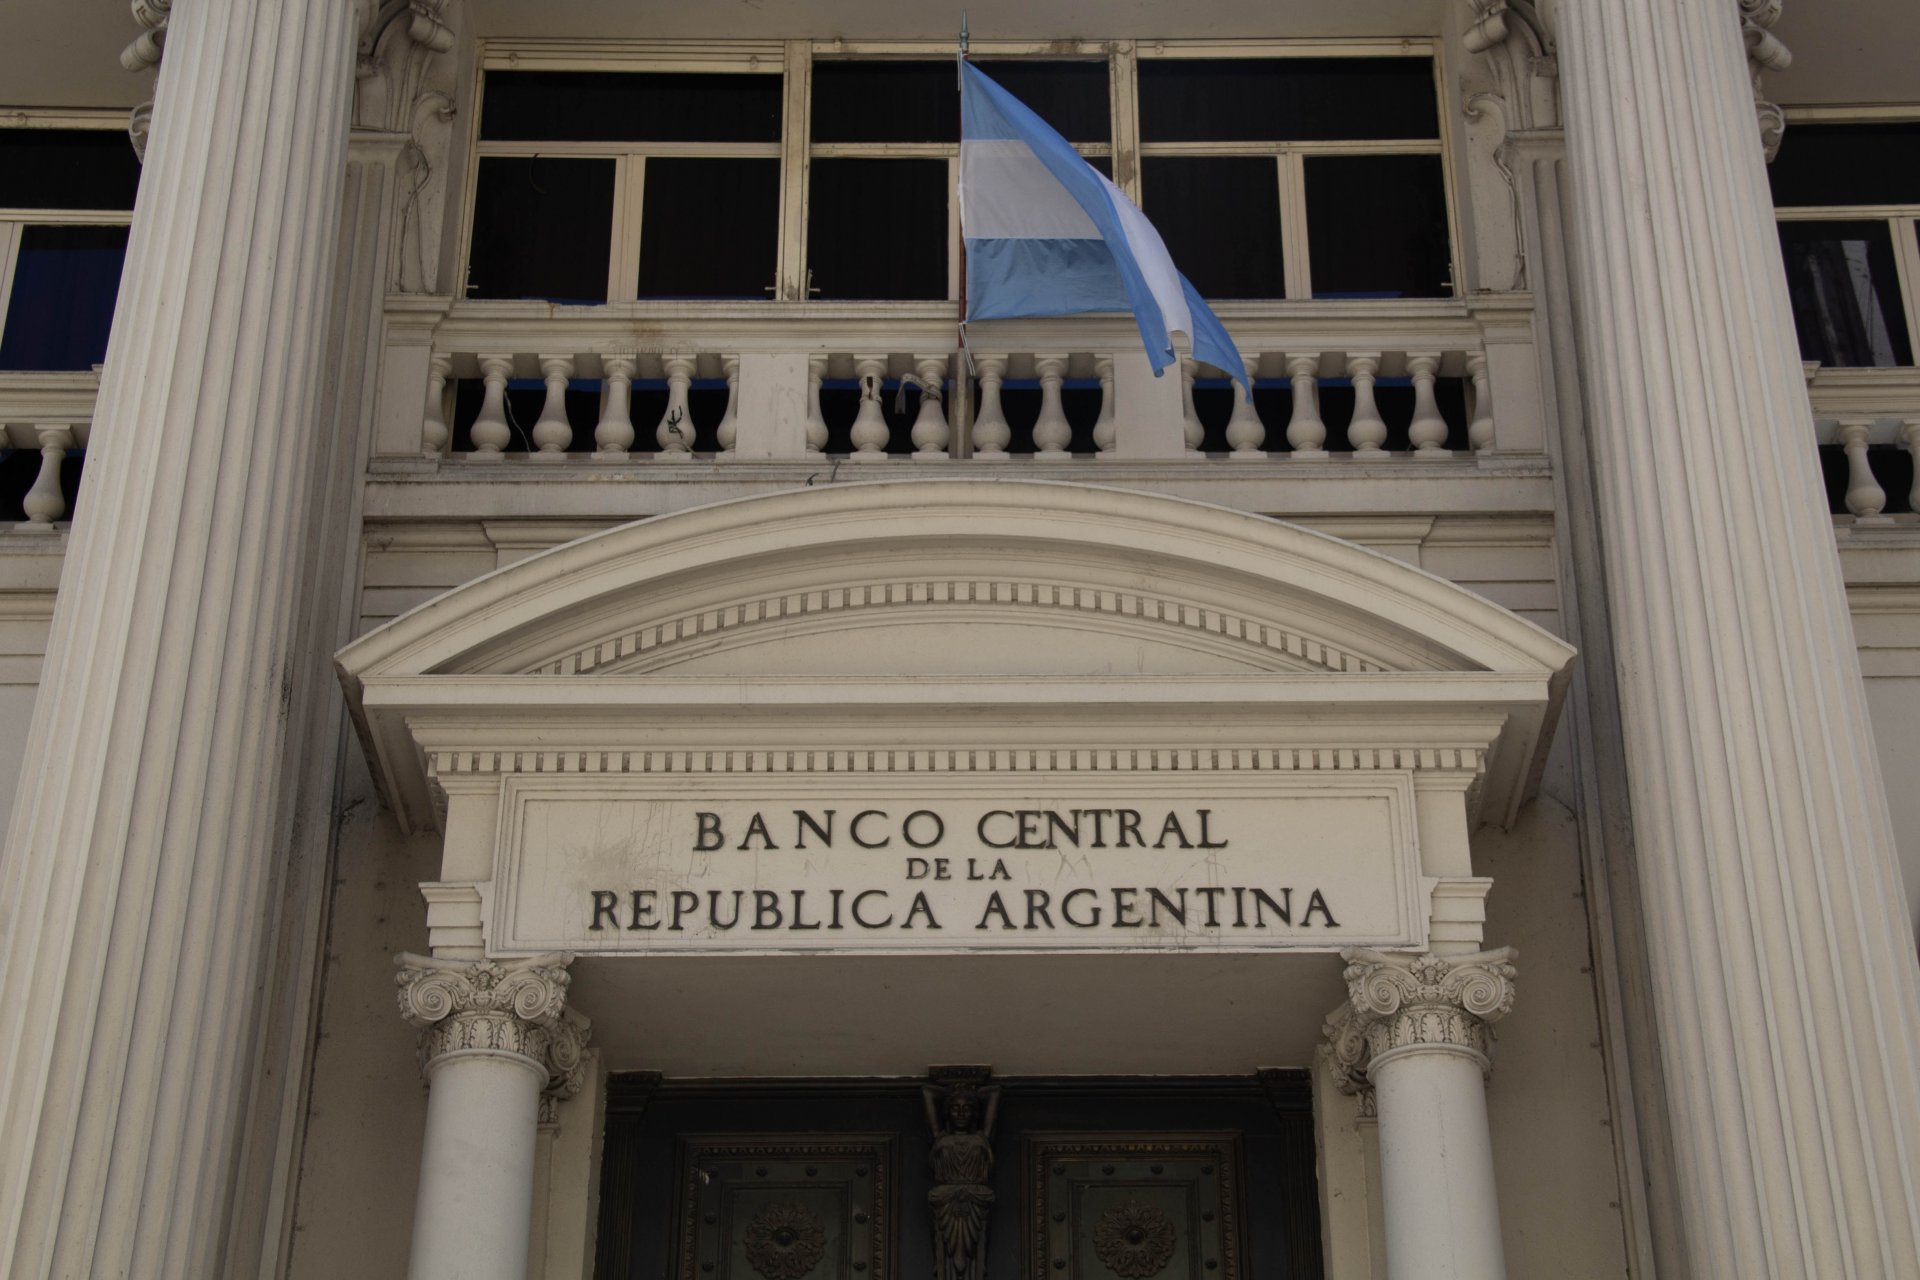 Banco Central - Bono bopreal